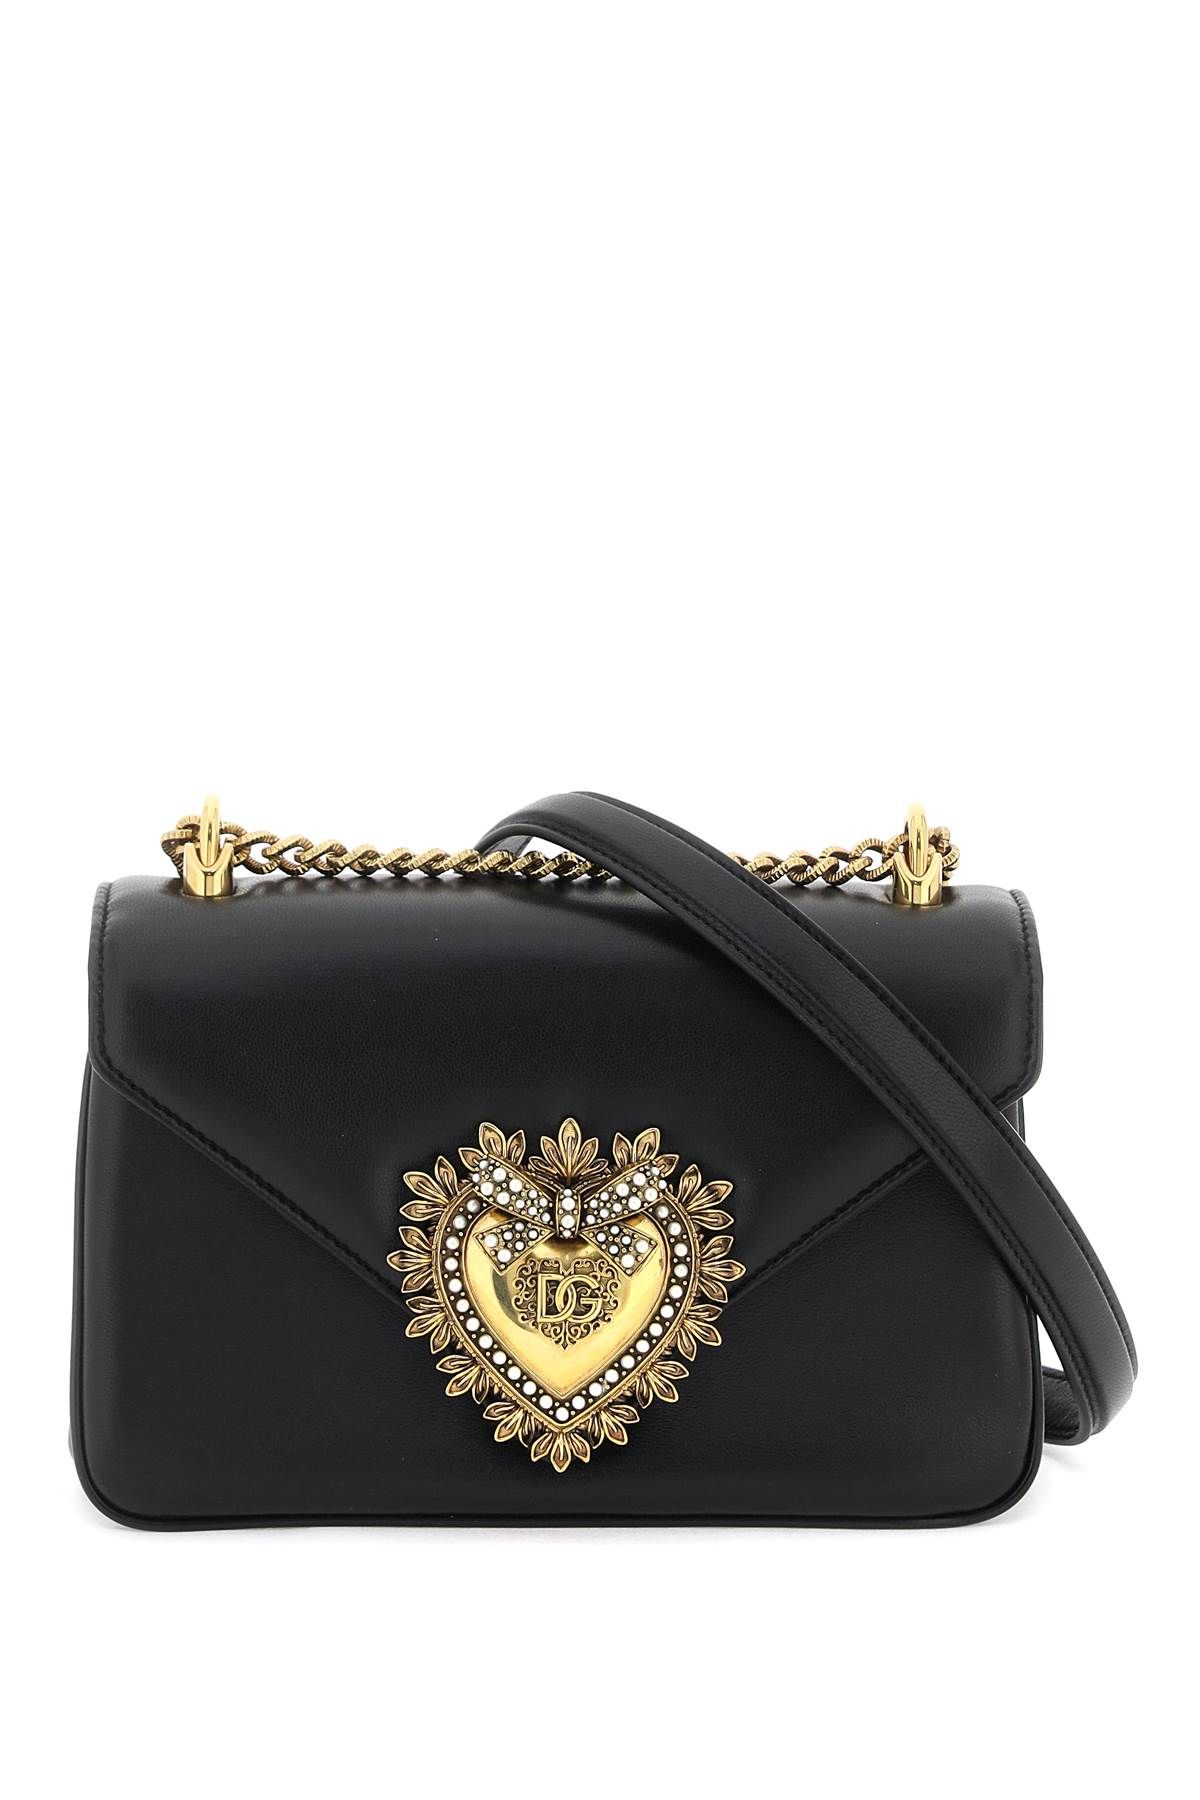 Dolce & Gabbana DOLCE & GABBANA devotion shoulder bag